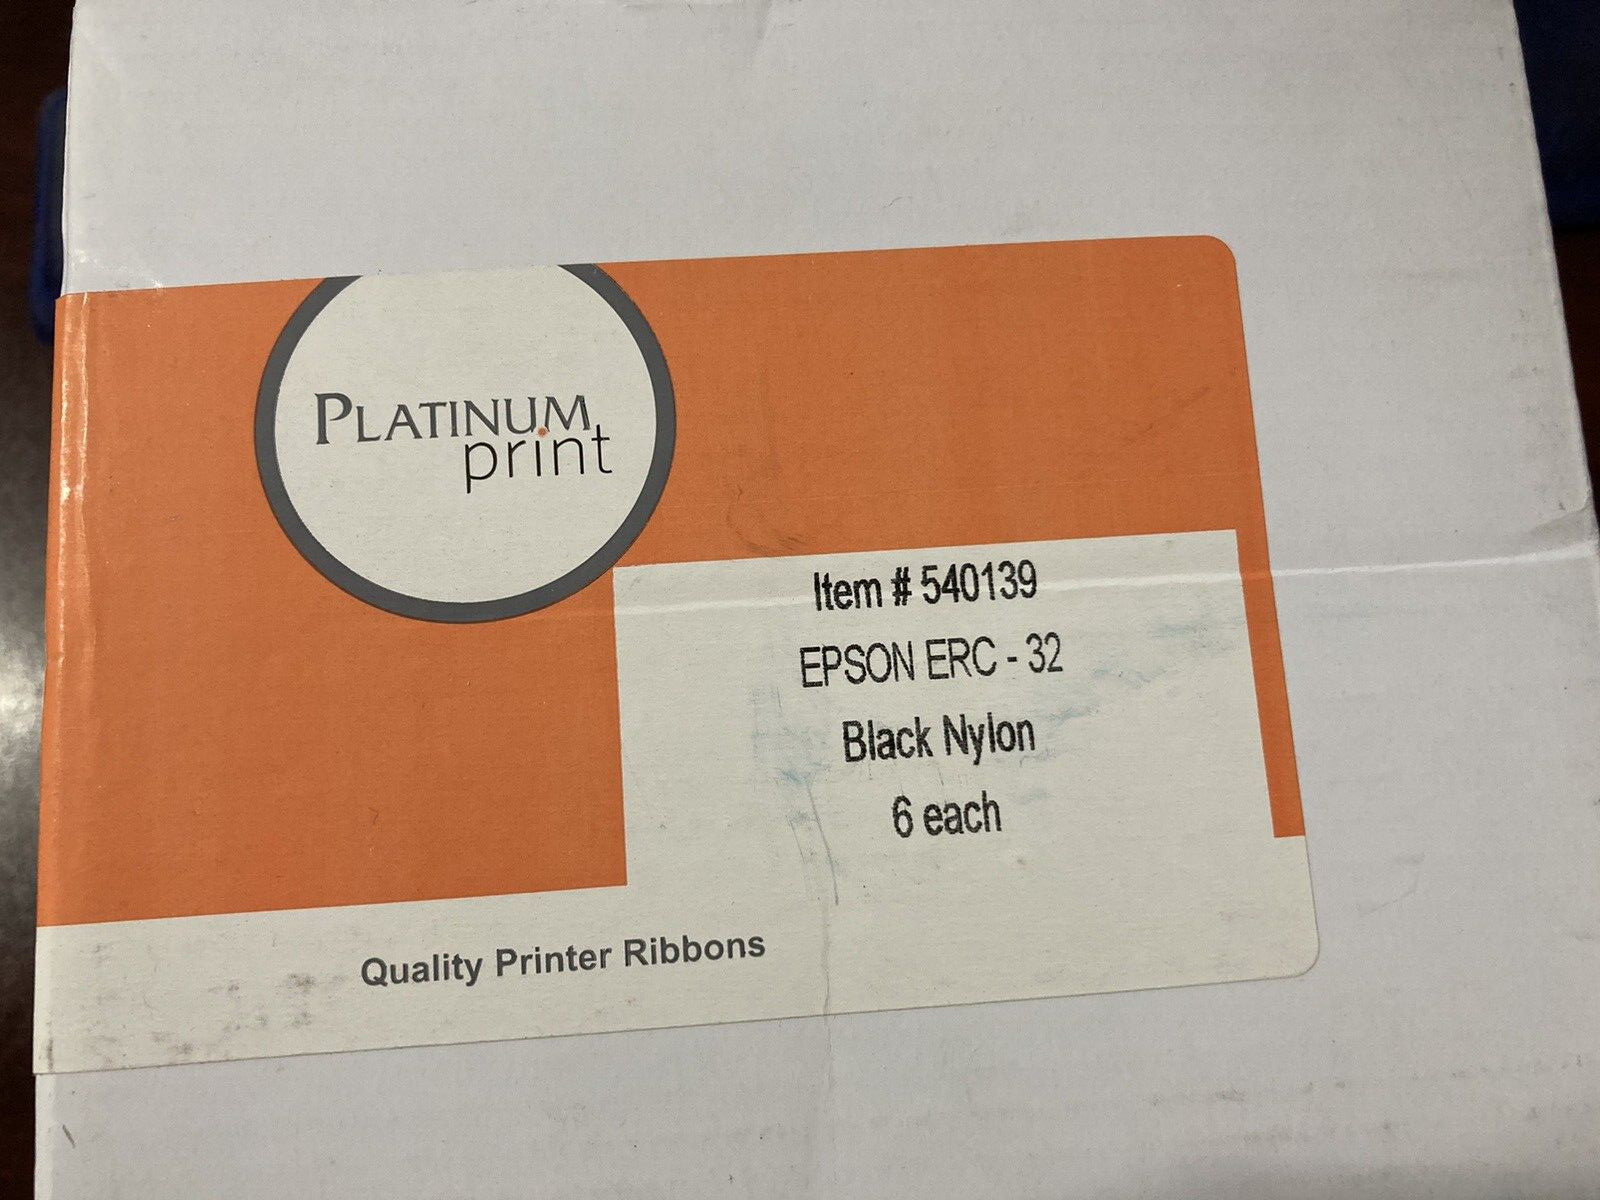 Platinum Print, 6 Black Nylon, Printer Ribbons, Item #540139